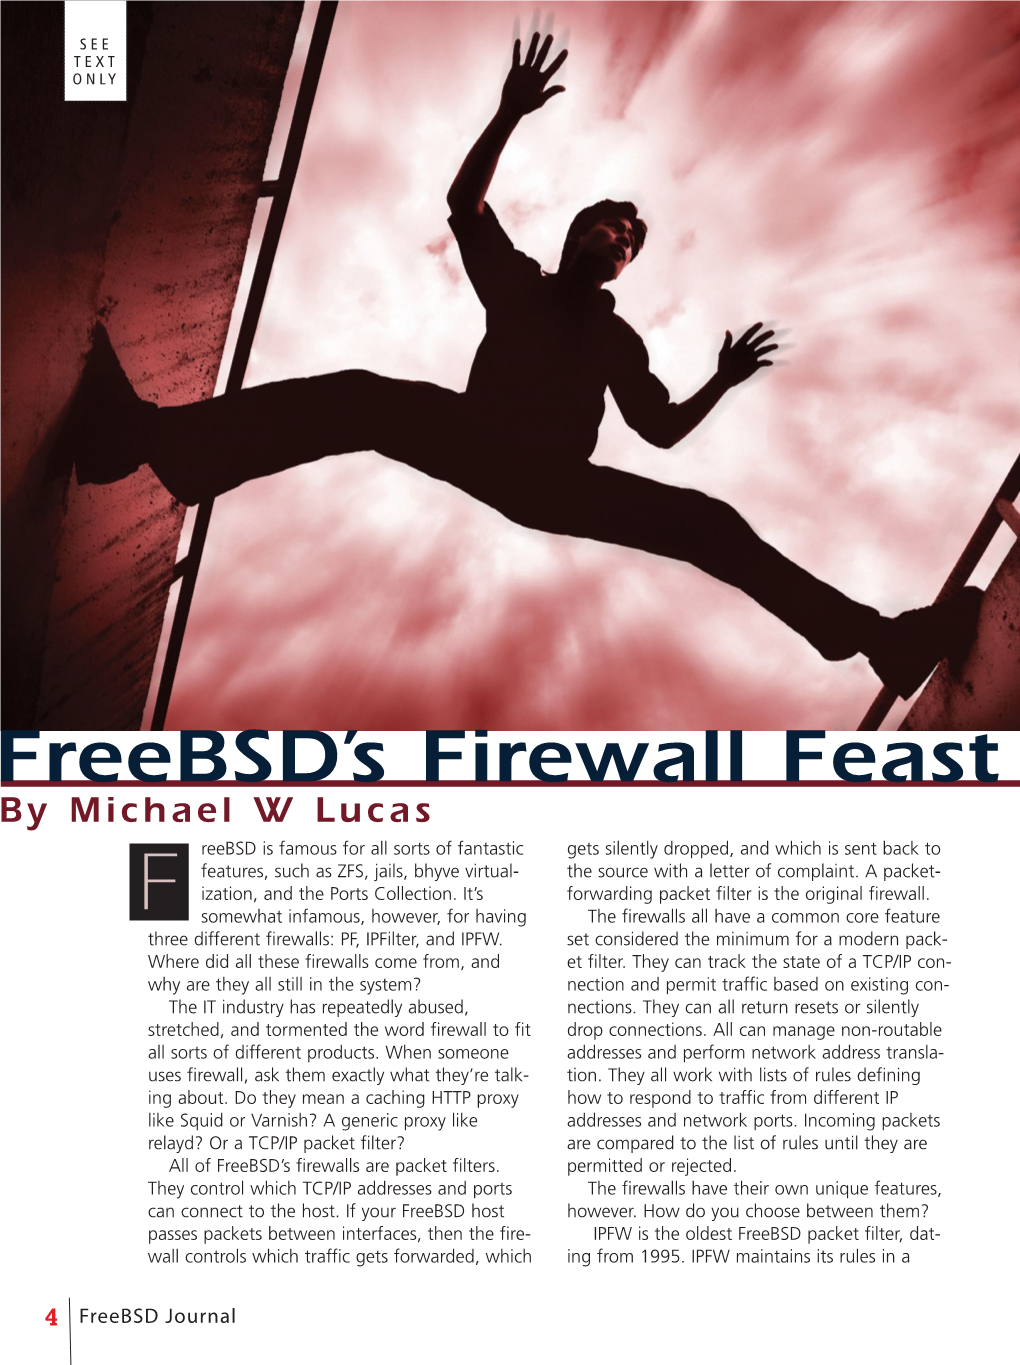 Freebsd's Firewall Feast